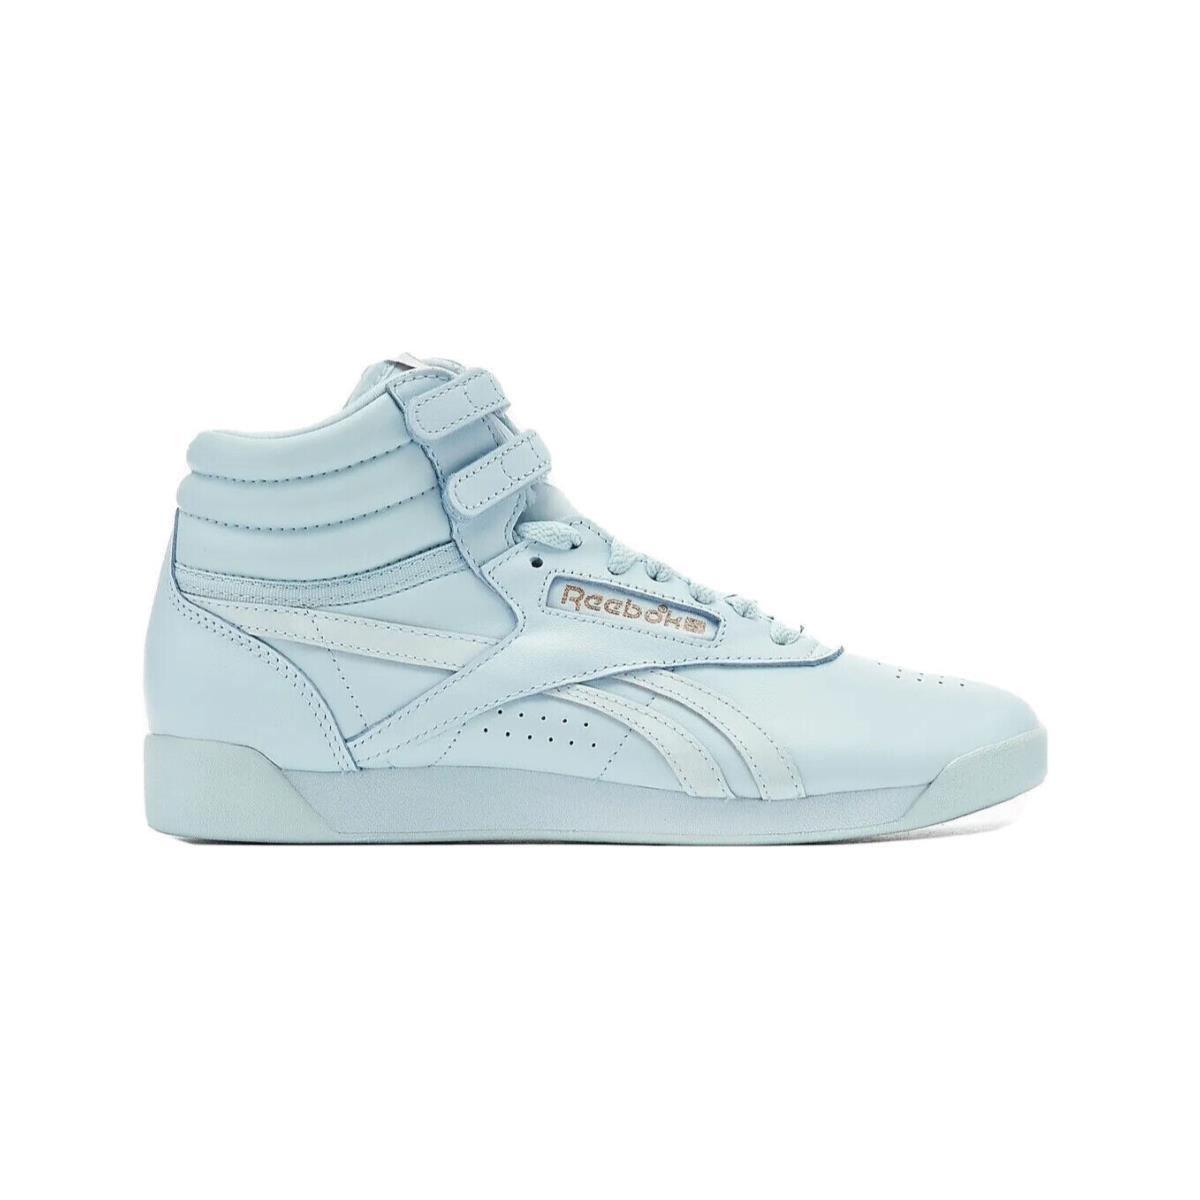 Womens Reebok Cardi B Freestyle High Top Shoes Sneaker Size 7 Light Blue GV6615 - Blue